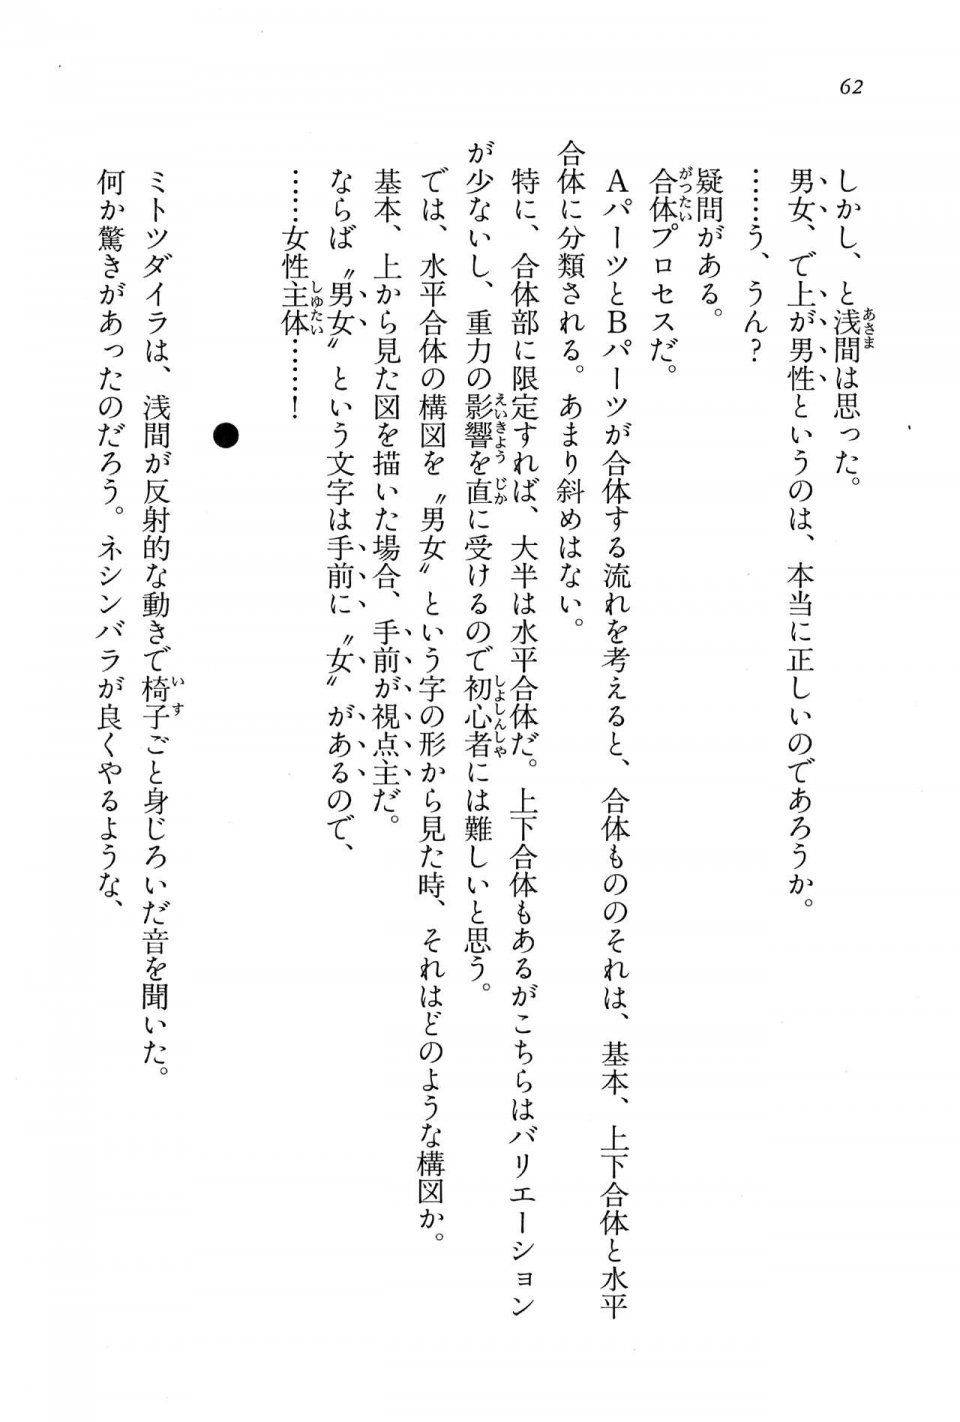 Kyoukai Senjou no Horizon BD Special Mininovel Vol 7(4A) - Photo #66